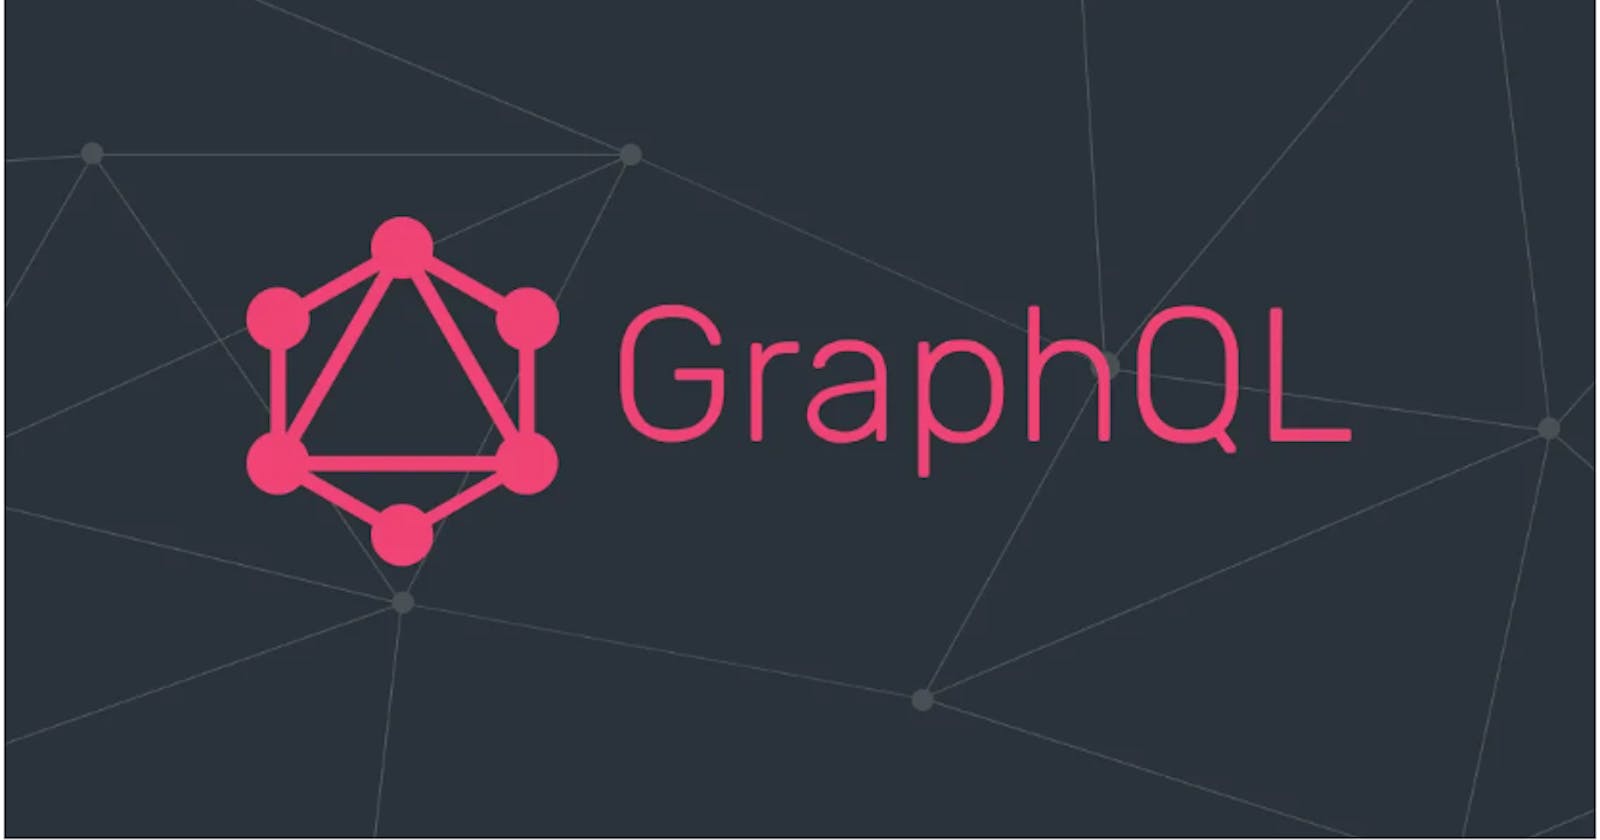 How to Write a GraphQL Query